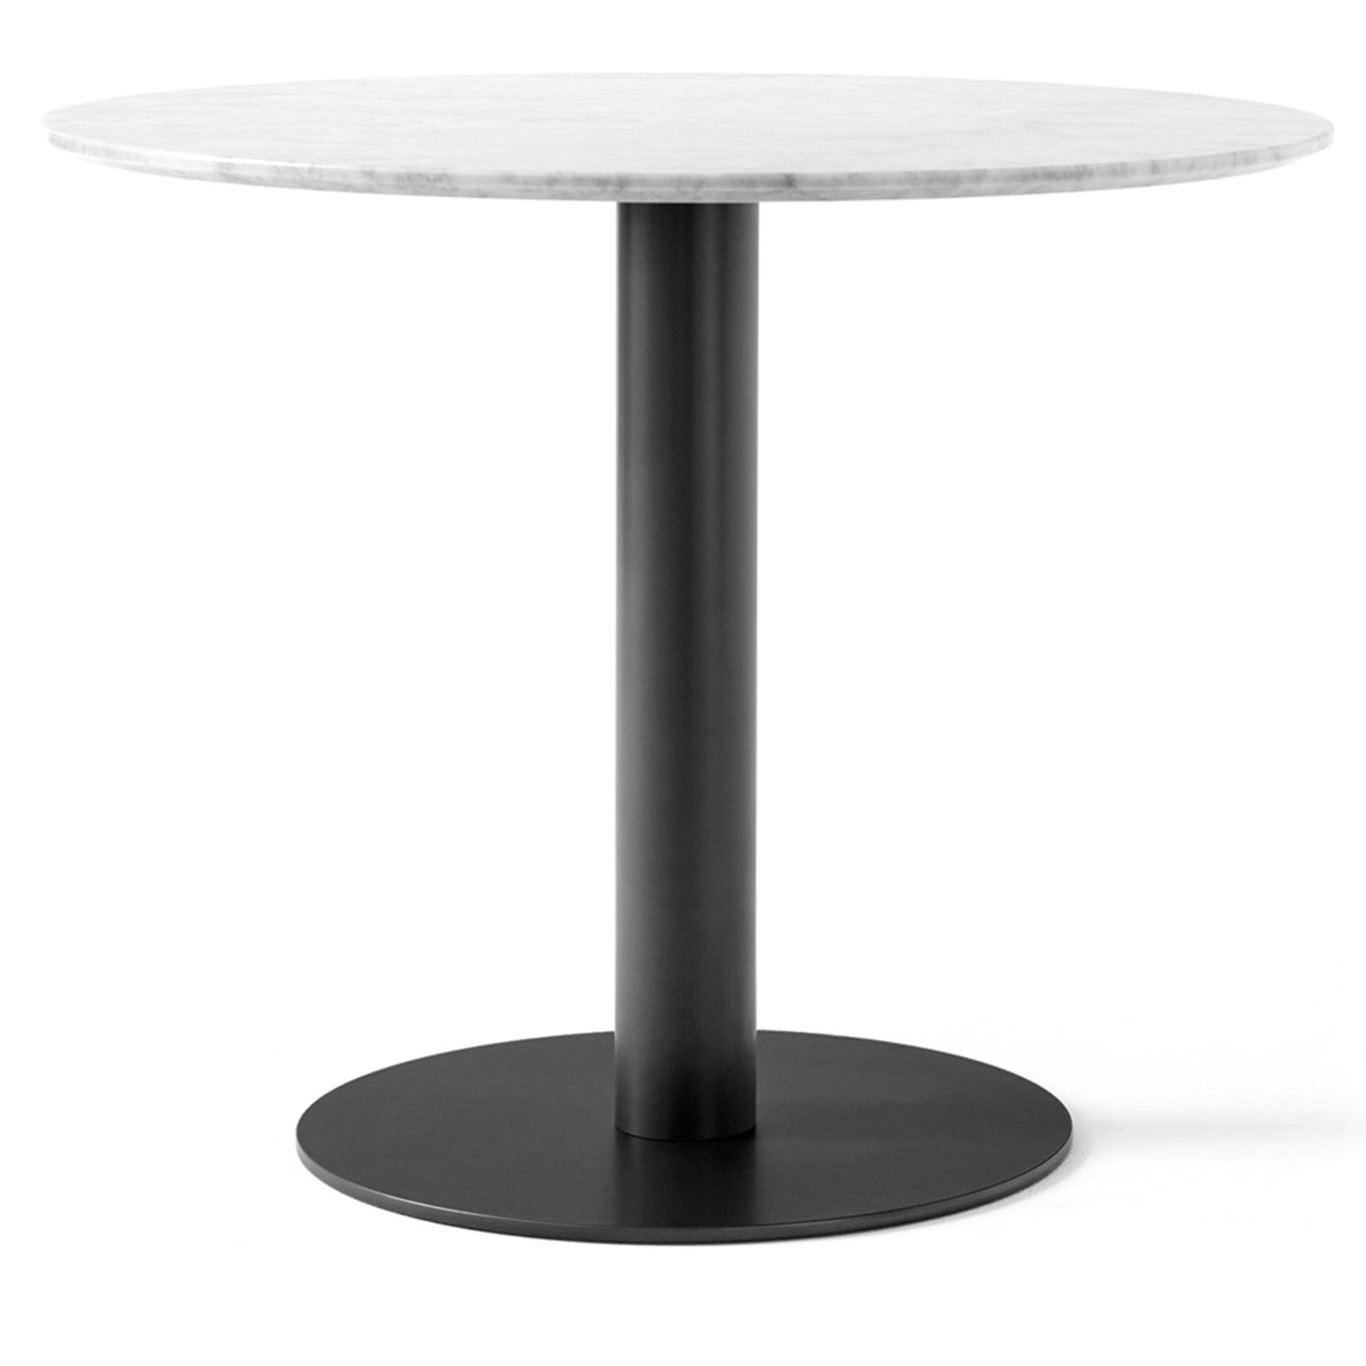 In between SK18 Table 90cm, White Marble / Black